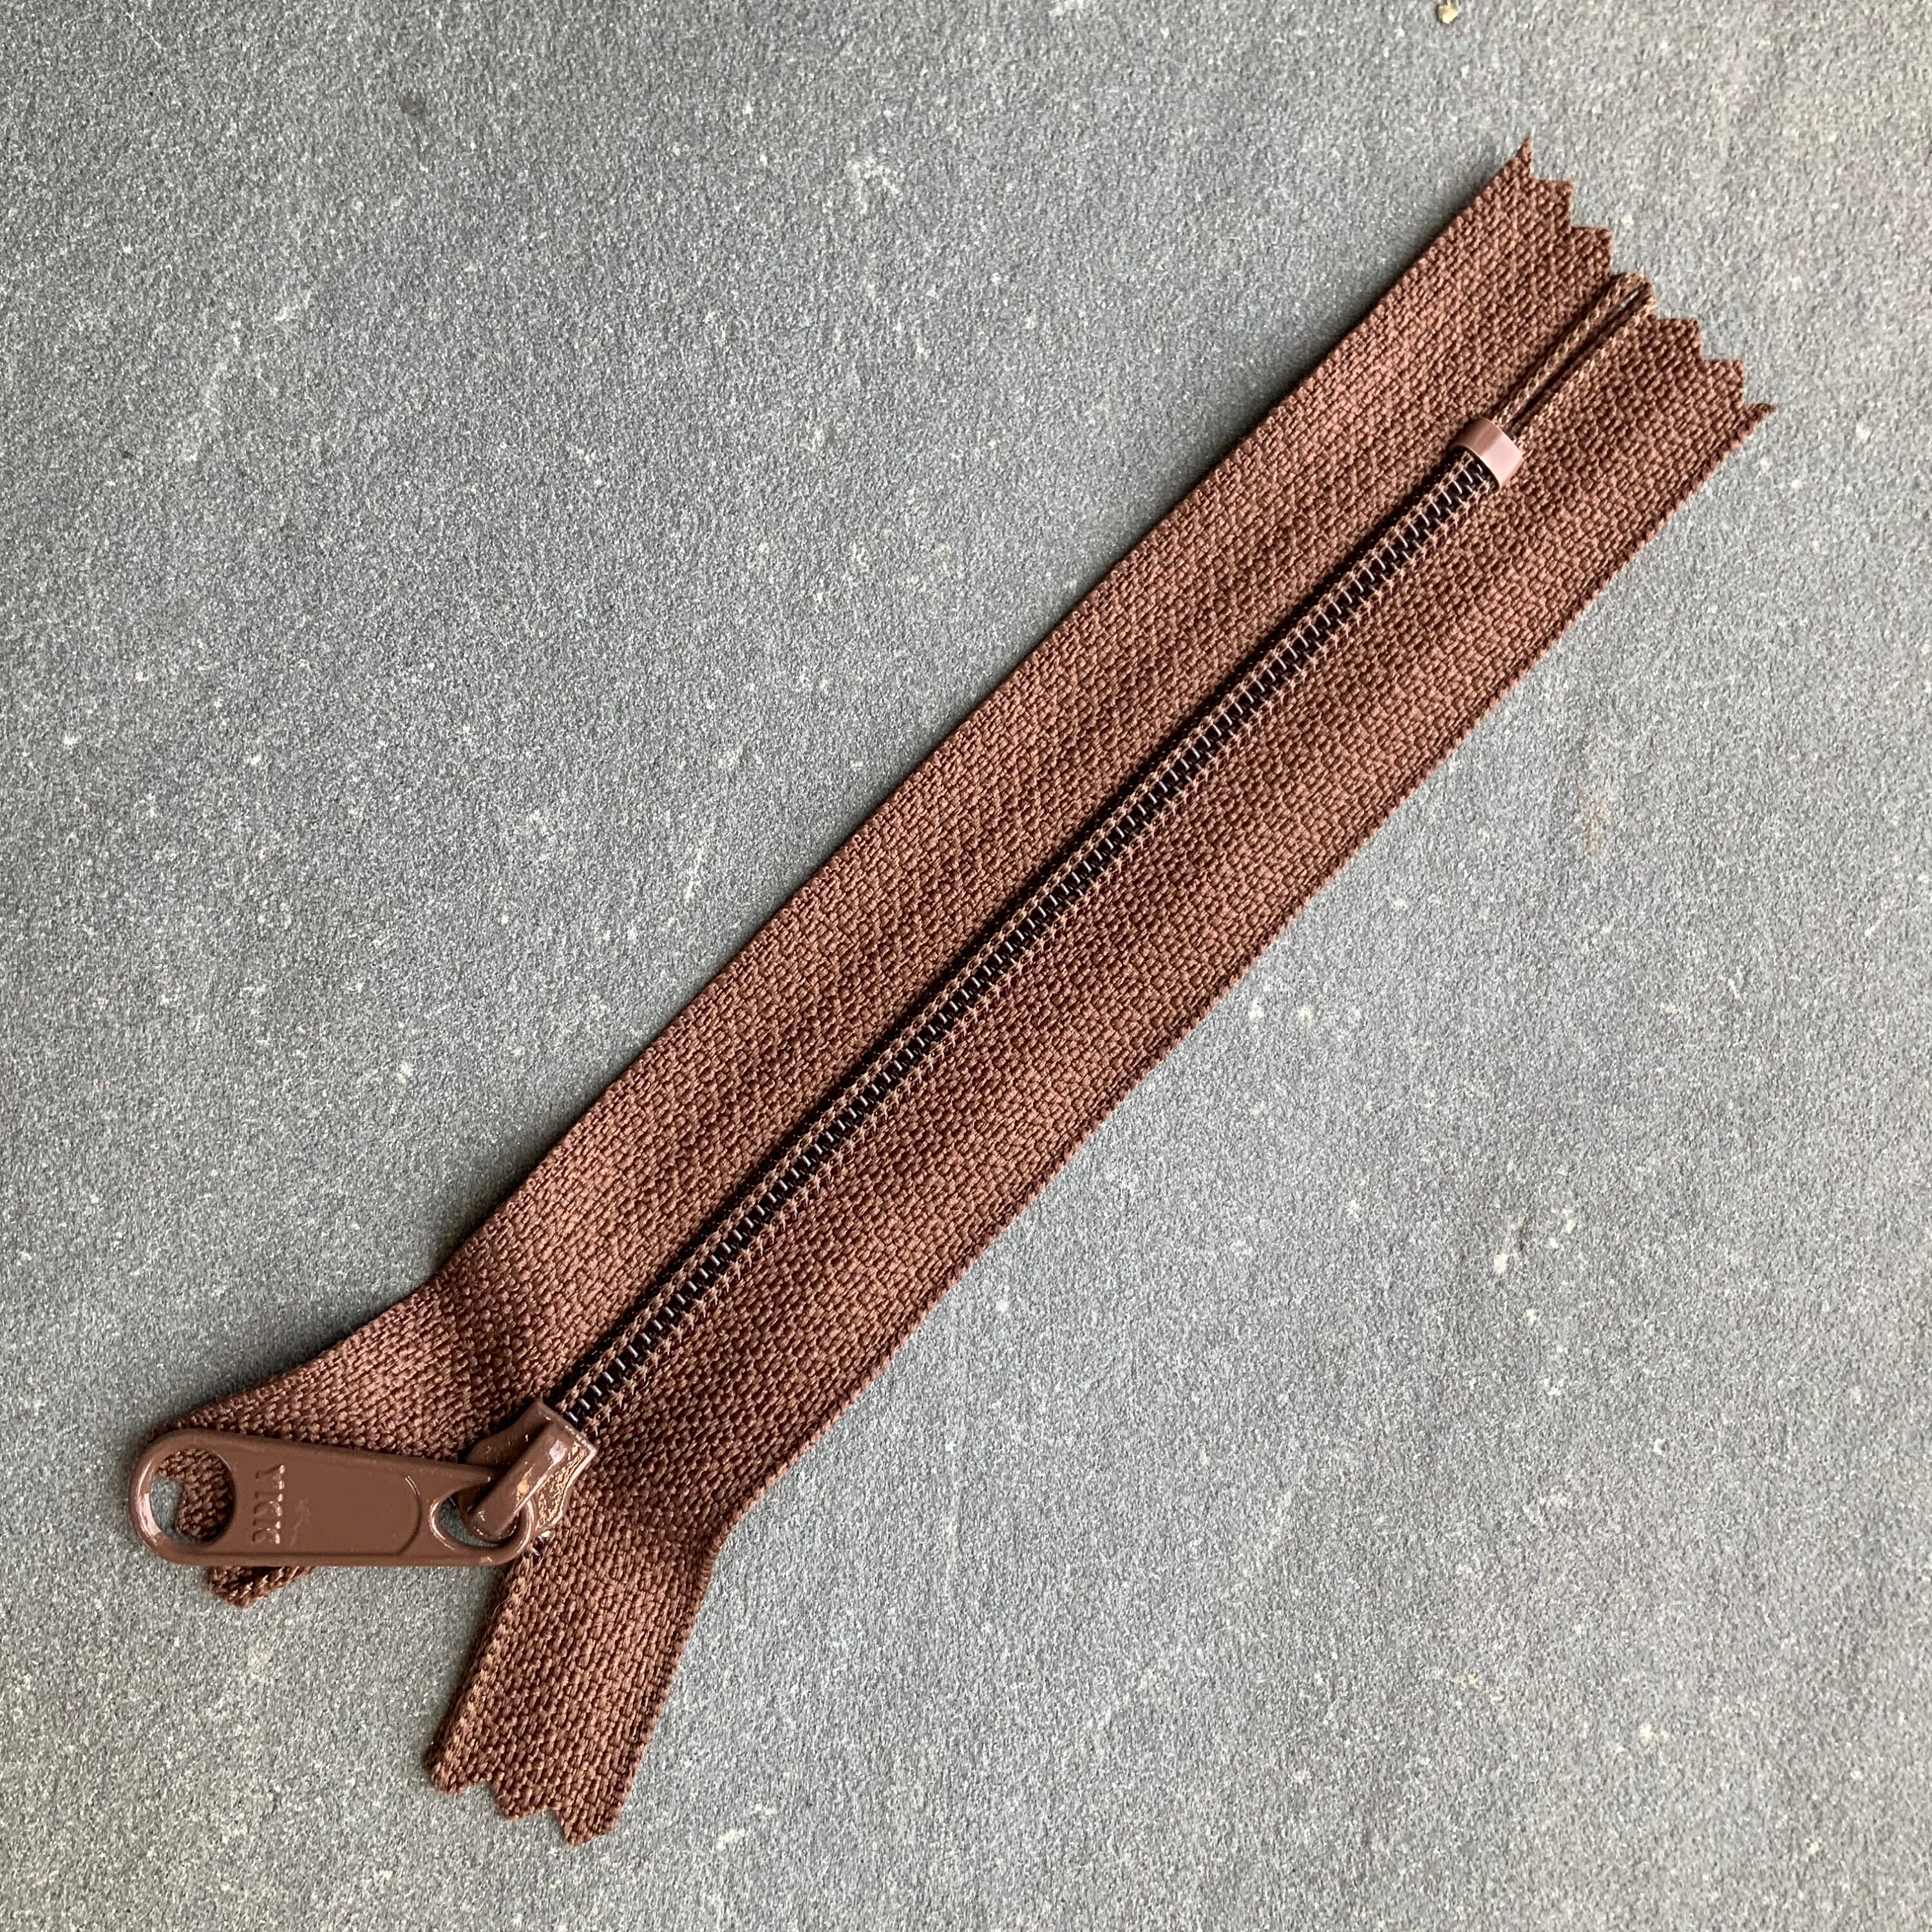 Zipper Repair Kit - #10 YKK Extra Heavy Brass Sliders - 2 Sliders & 4 Top Stops per Pack - Made in The United States